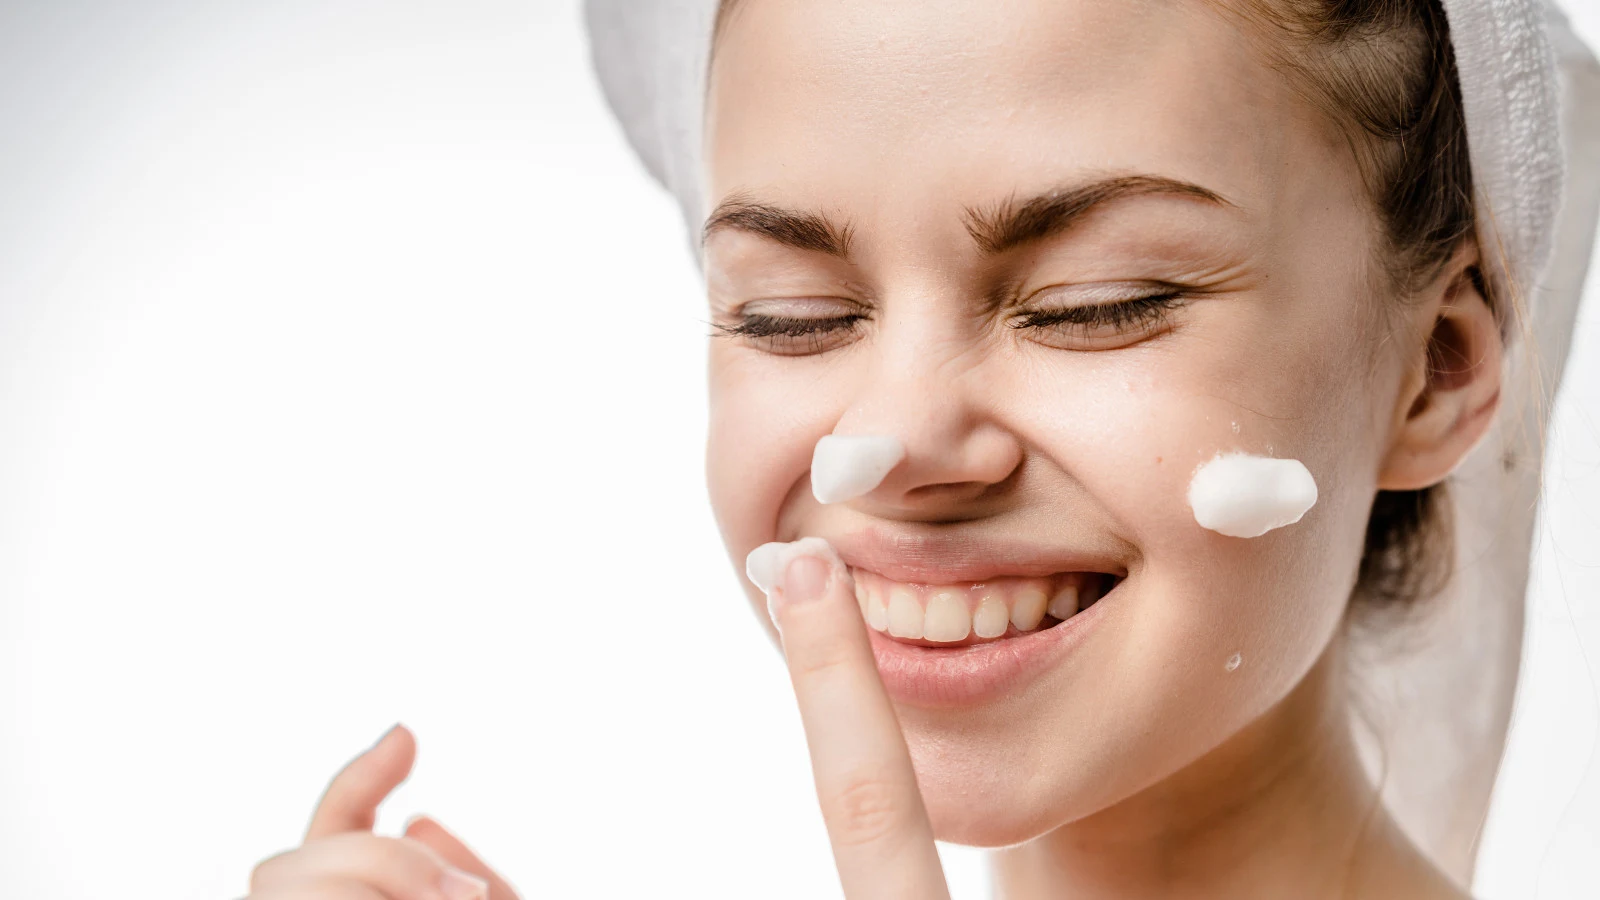 Woman smiling while applying shaving gel